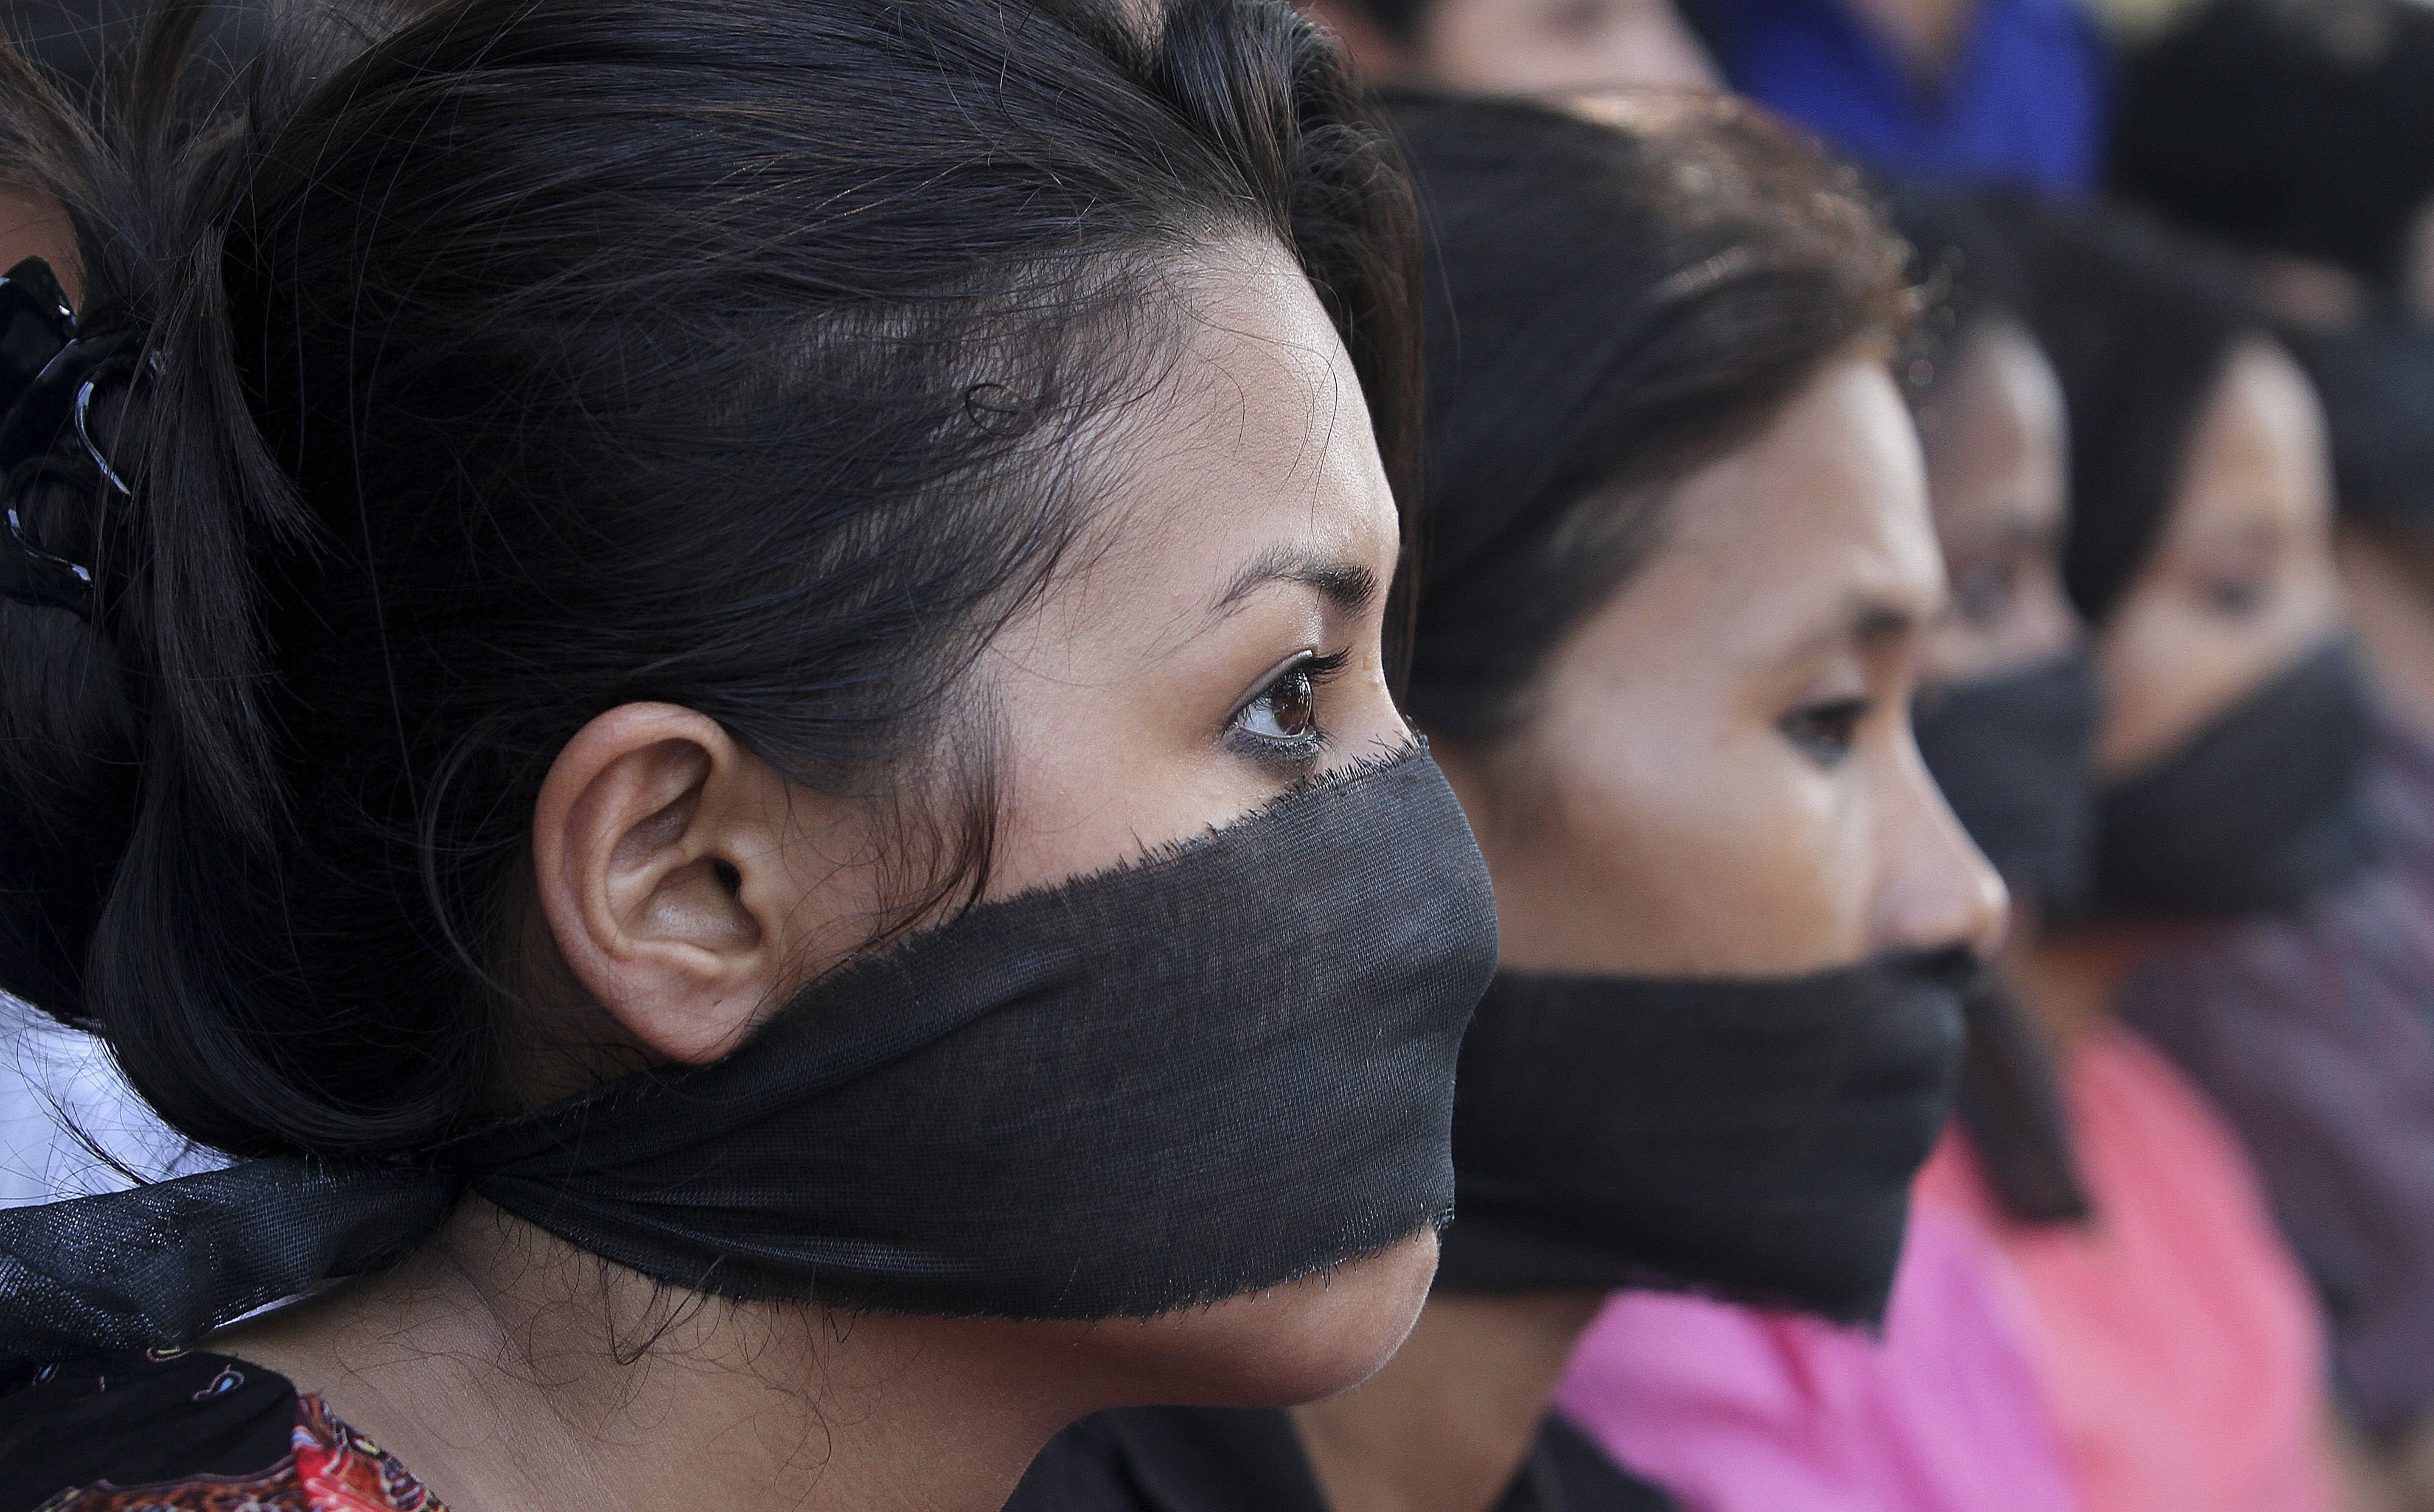 Bp Xxx Sex Rape - Despite reforms, sexual assault survivors face systemic barriers in India |  CNN